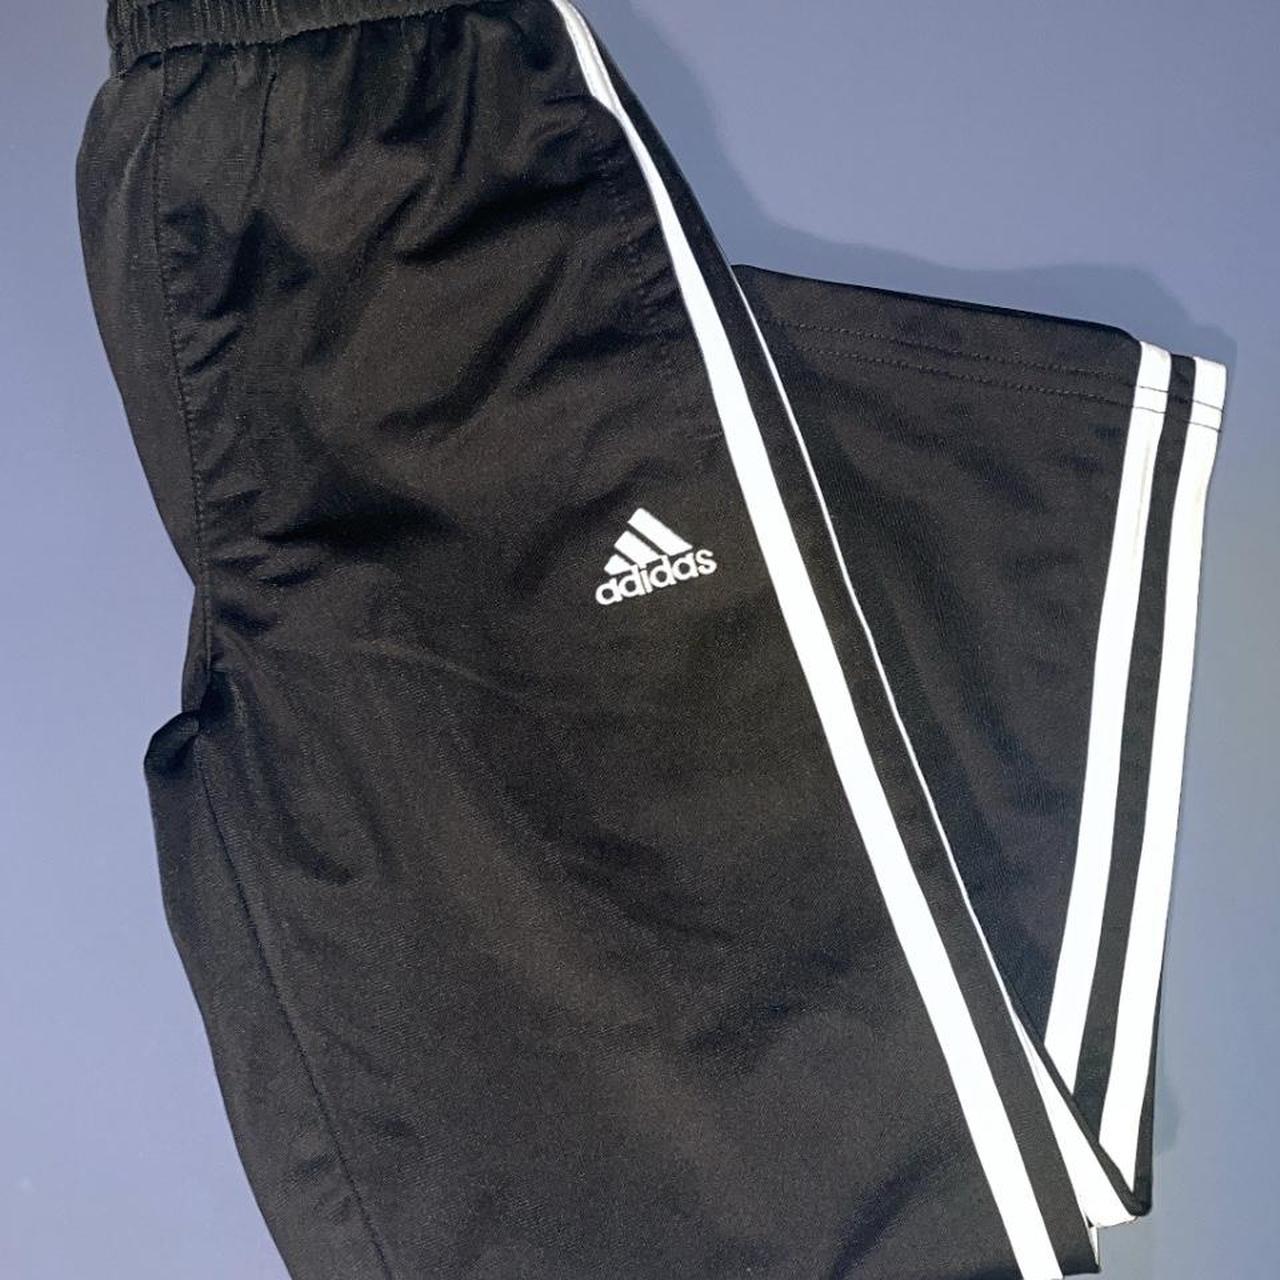 Boys Adidas Sweatpants Size 6 Black with white... - Depop